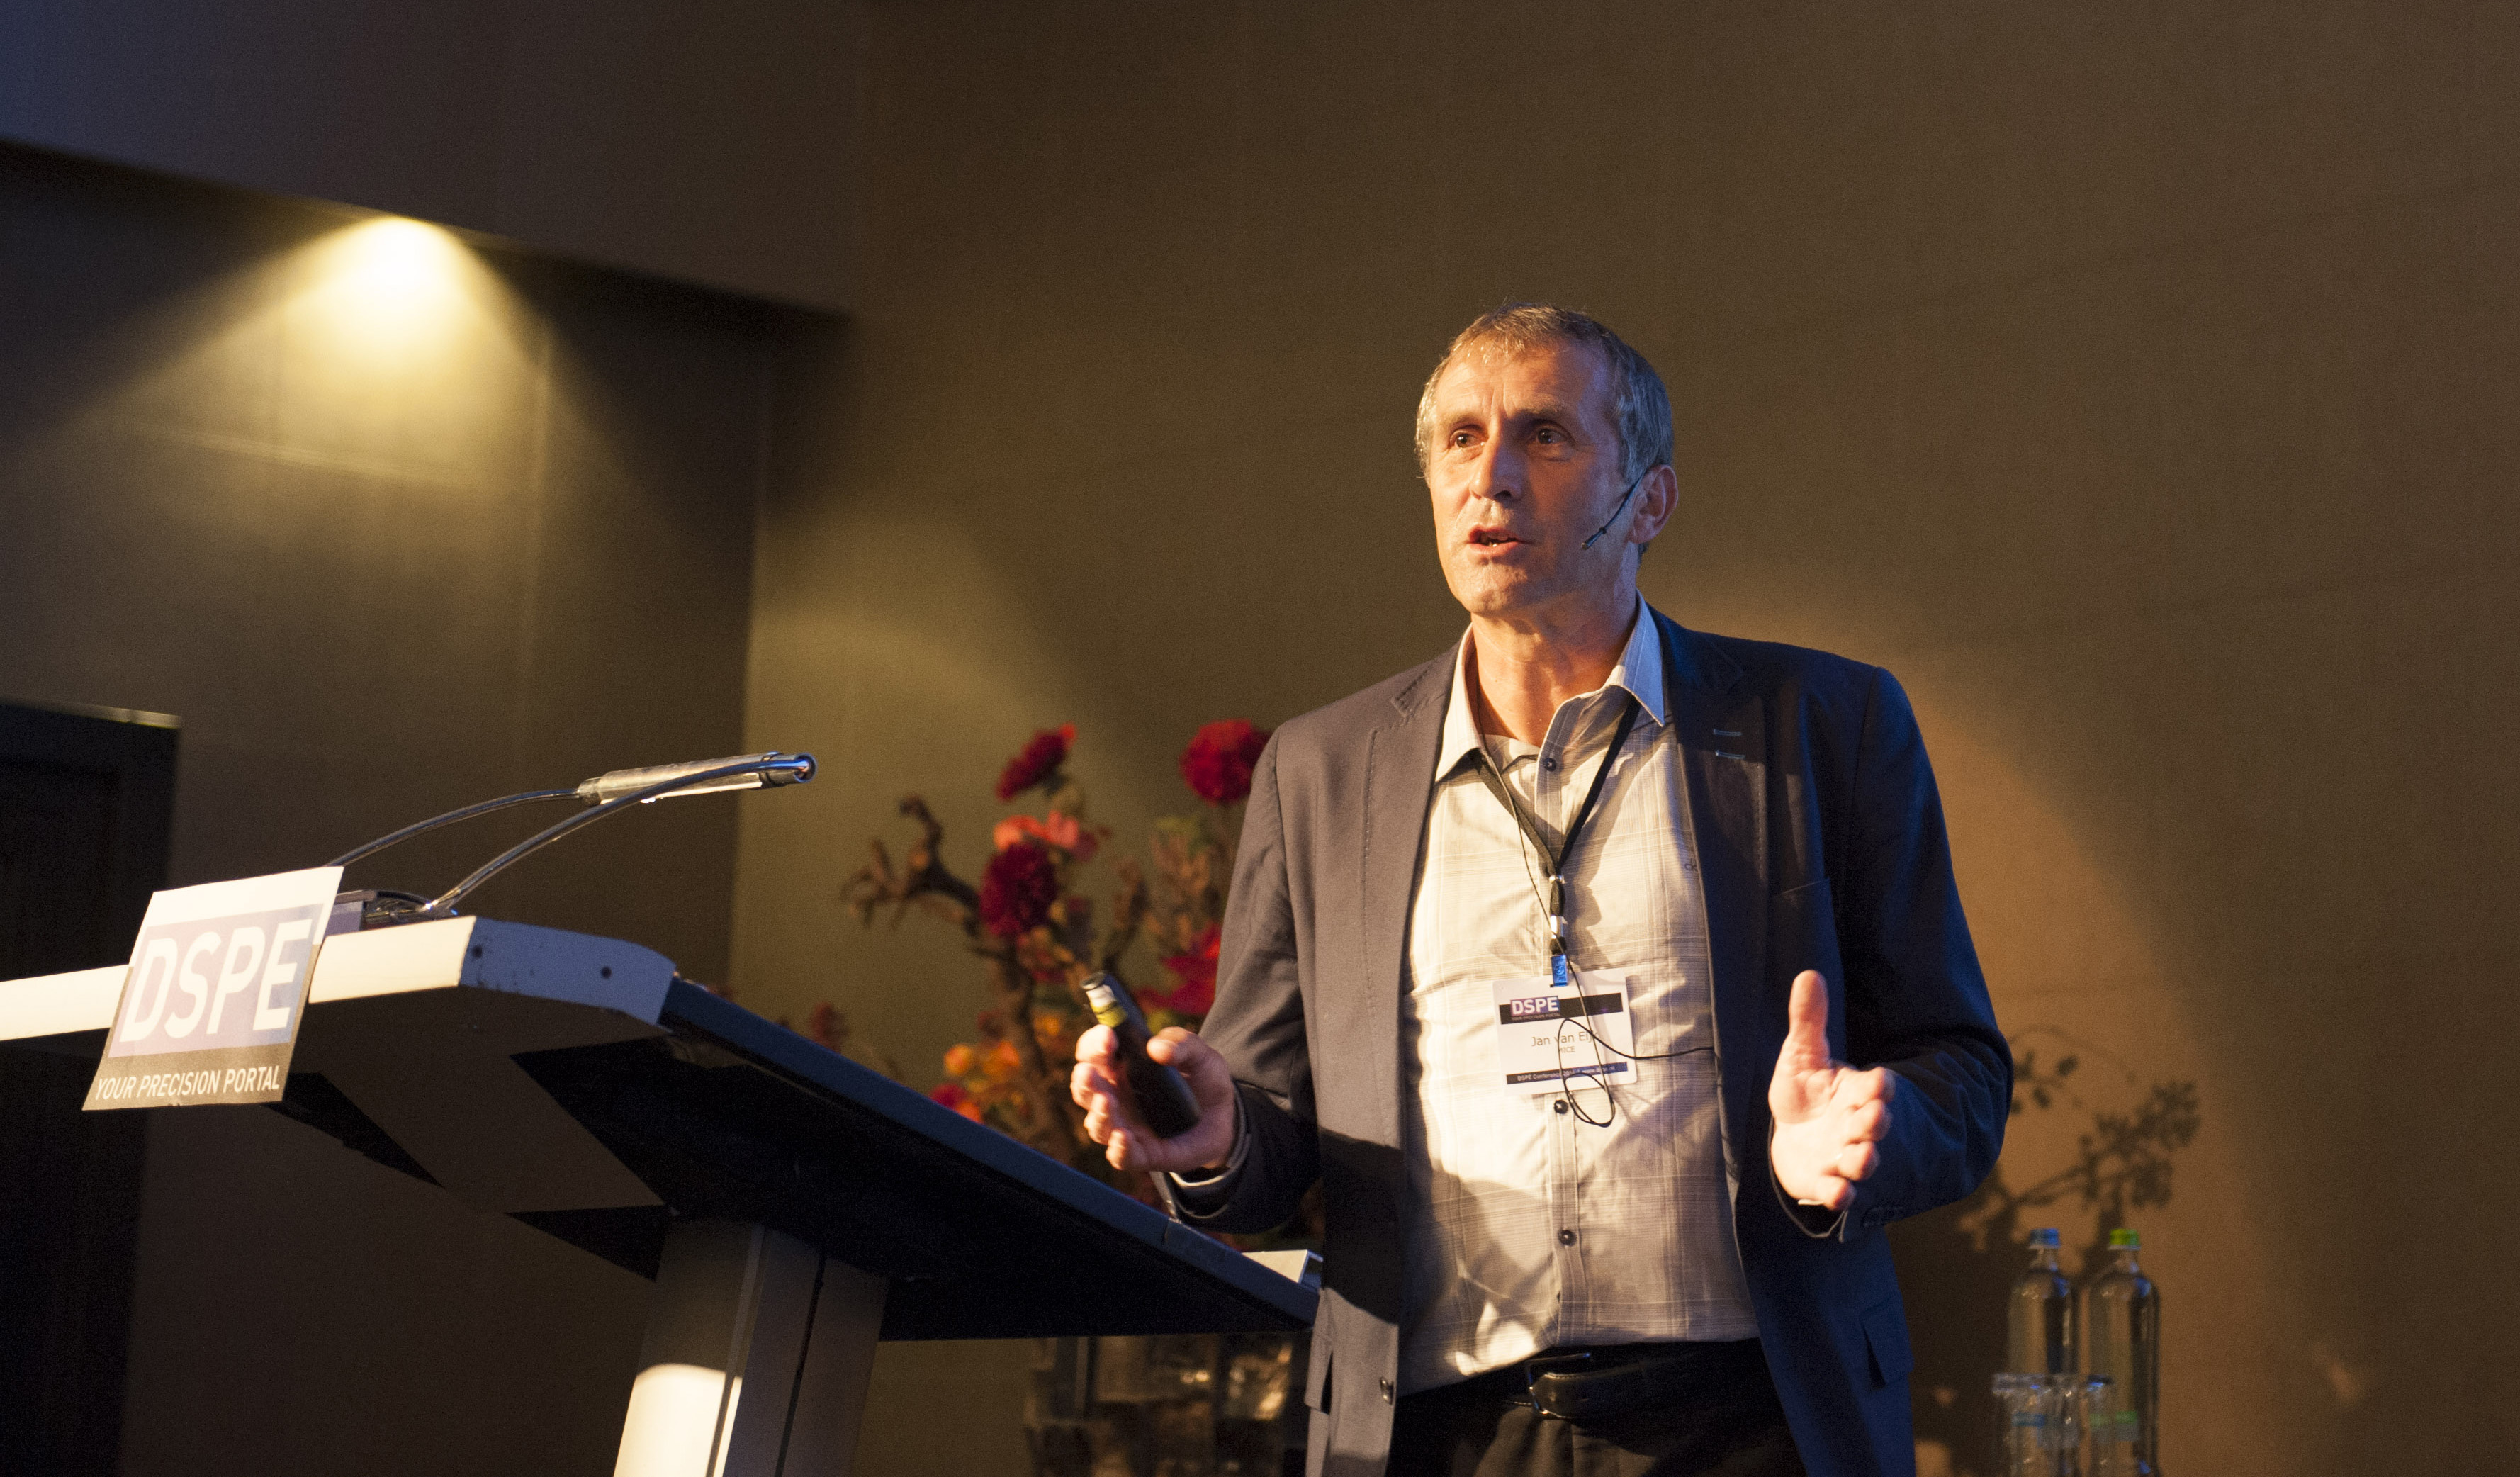 Jan van Eijk speaks at the DSPE Conference on Precision Mechatronics